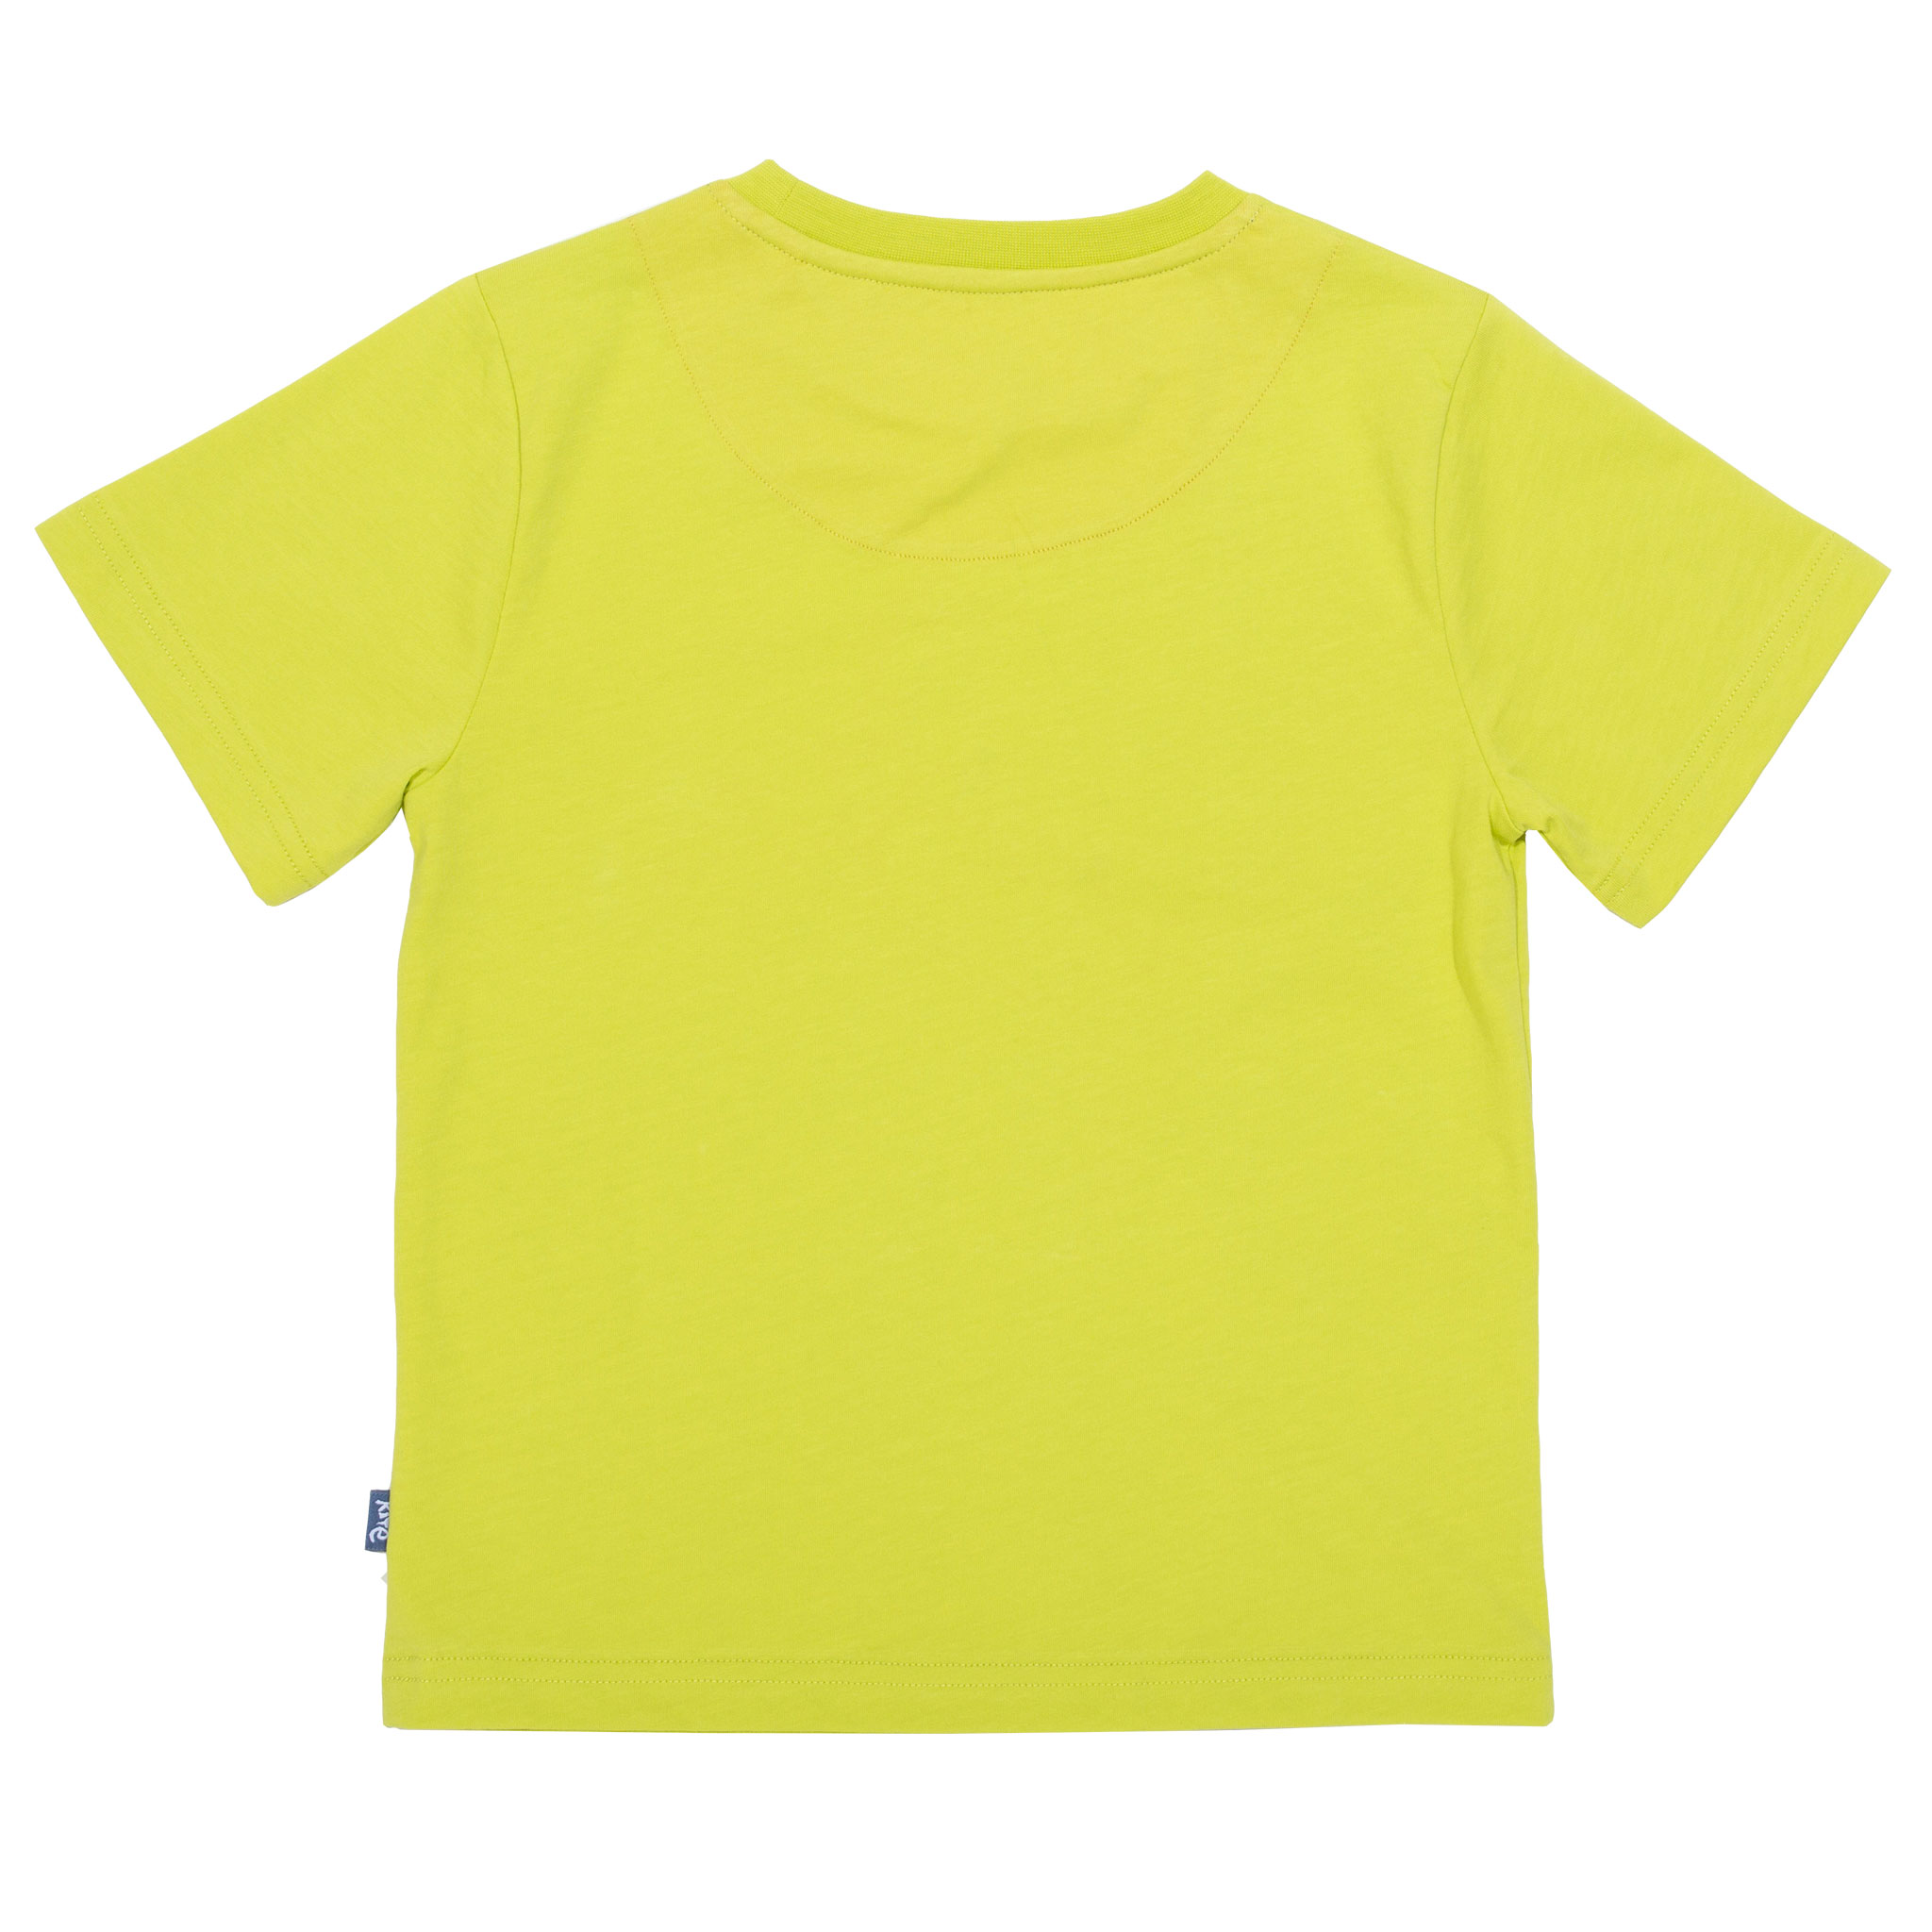 Limonengrünes Kurzarm-Shirt Clever Crab